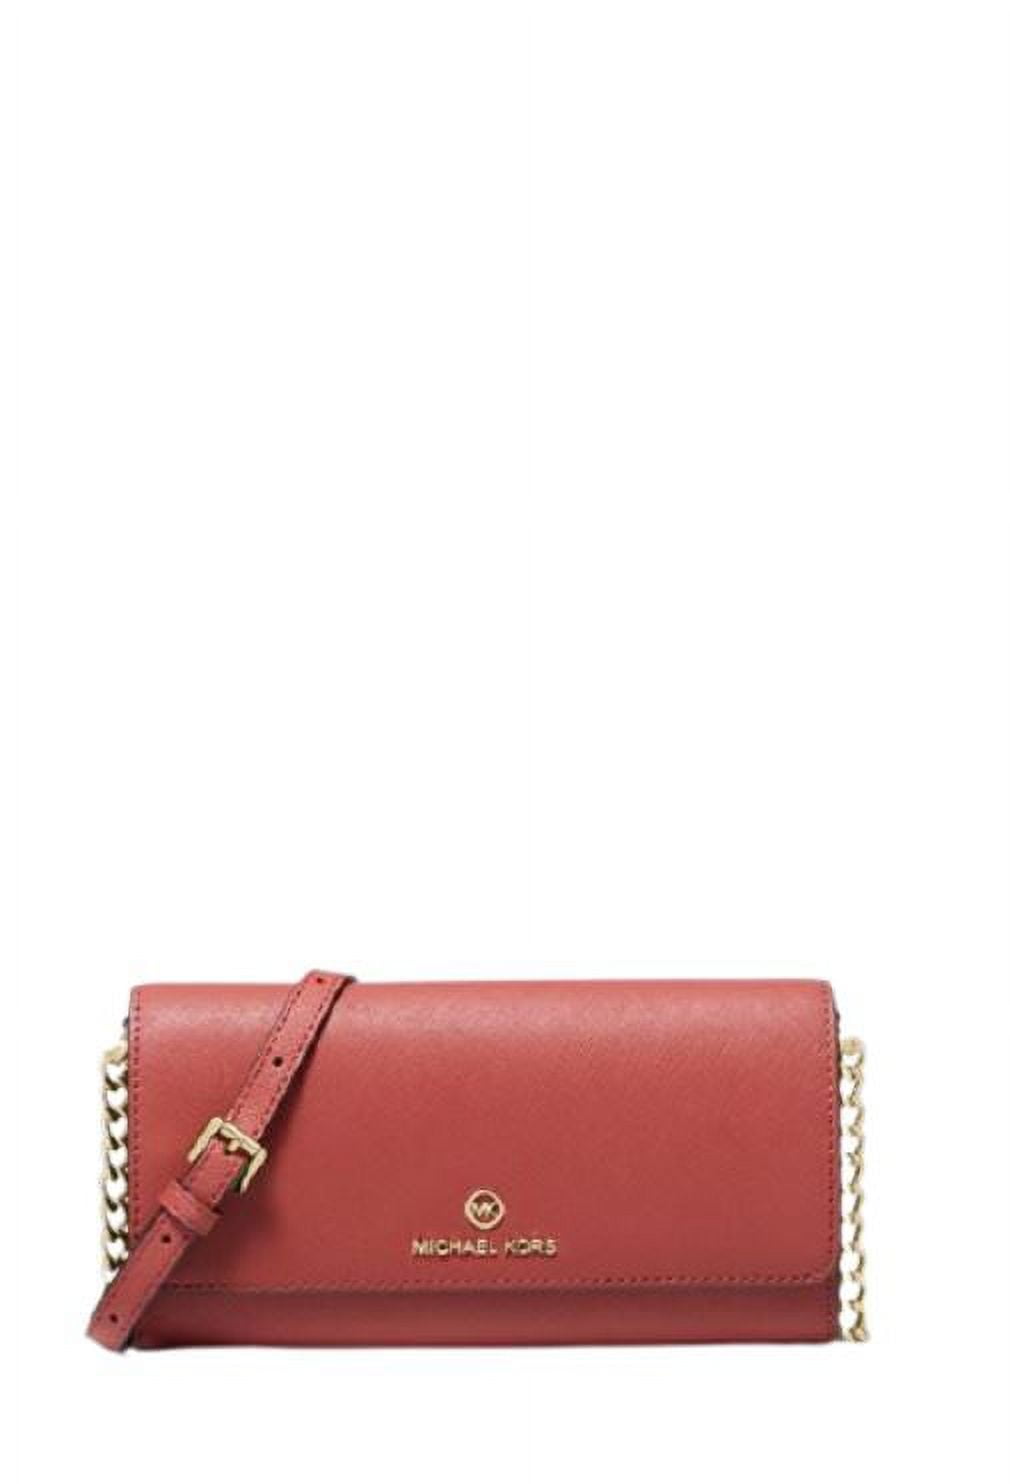 Michael Kors Pink Saffiano Leather Small Crossbody Top Handle Bag (NWOT)